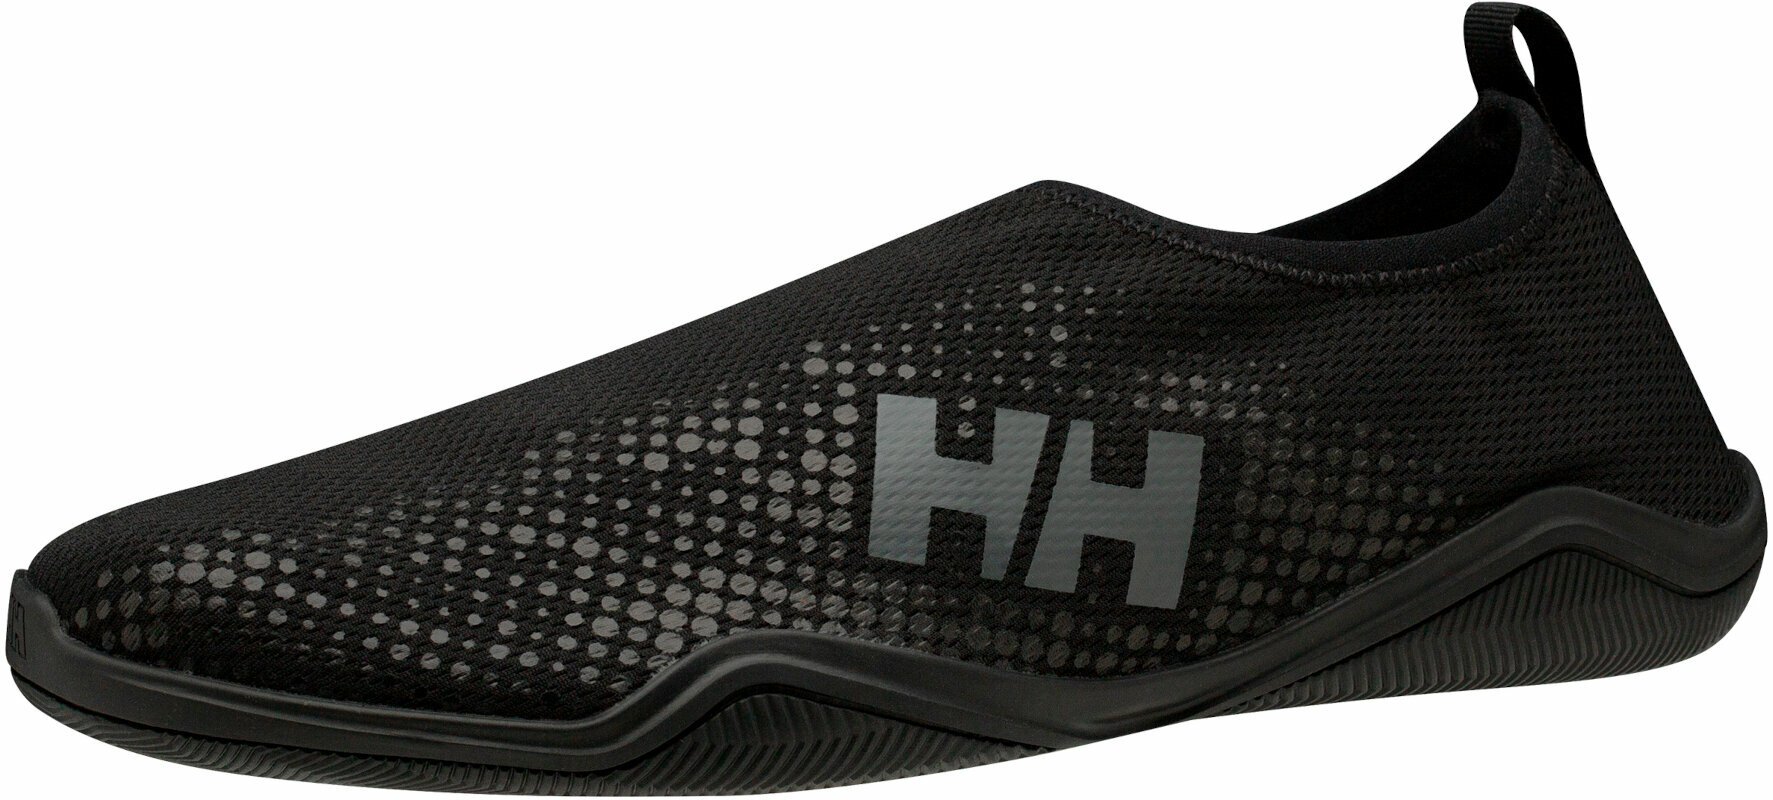 Scarpe uomo Helly Hansen Men's Crest Watermoc Black/Charcoal 44,5